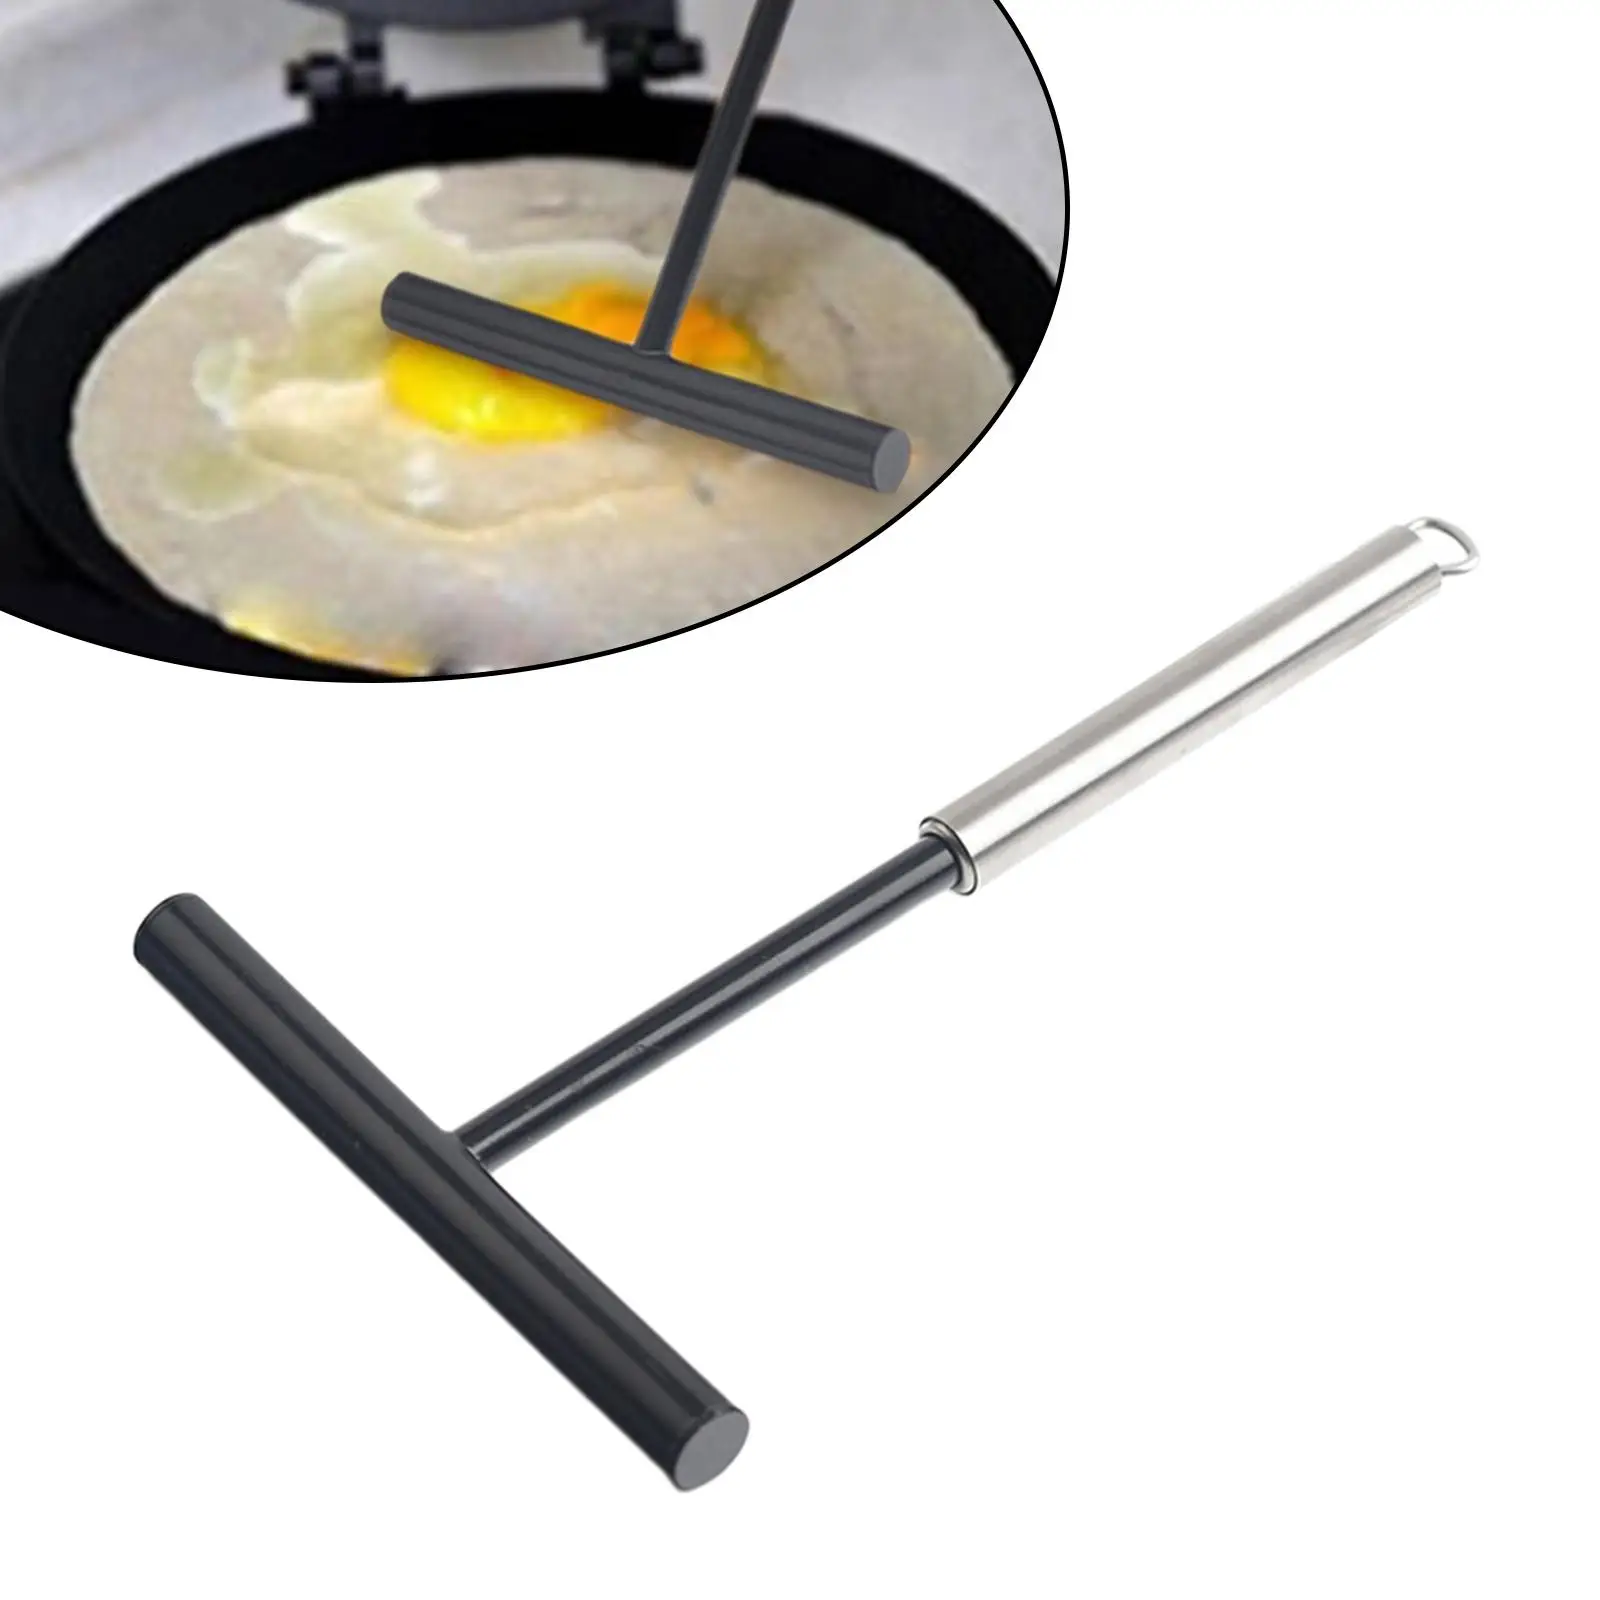 T Shape Pancake Batter Spreader Scraper Cooking Utensils Tools Portable Round Handle Stick DIY for Kitchen Household